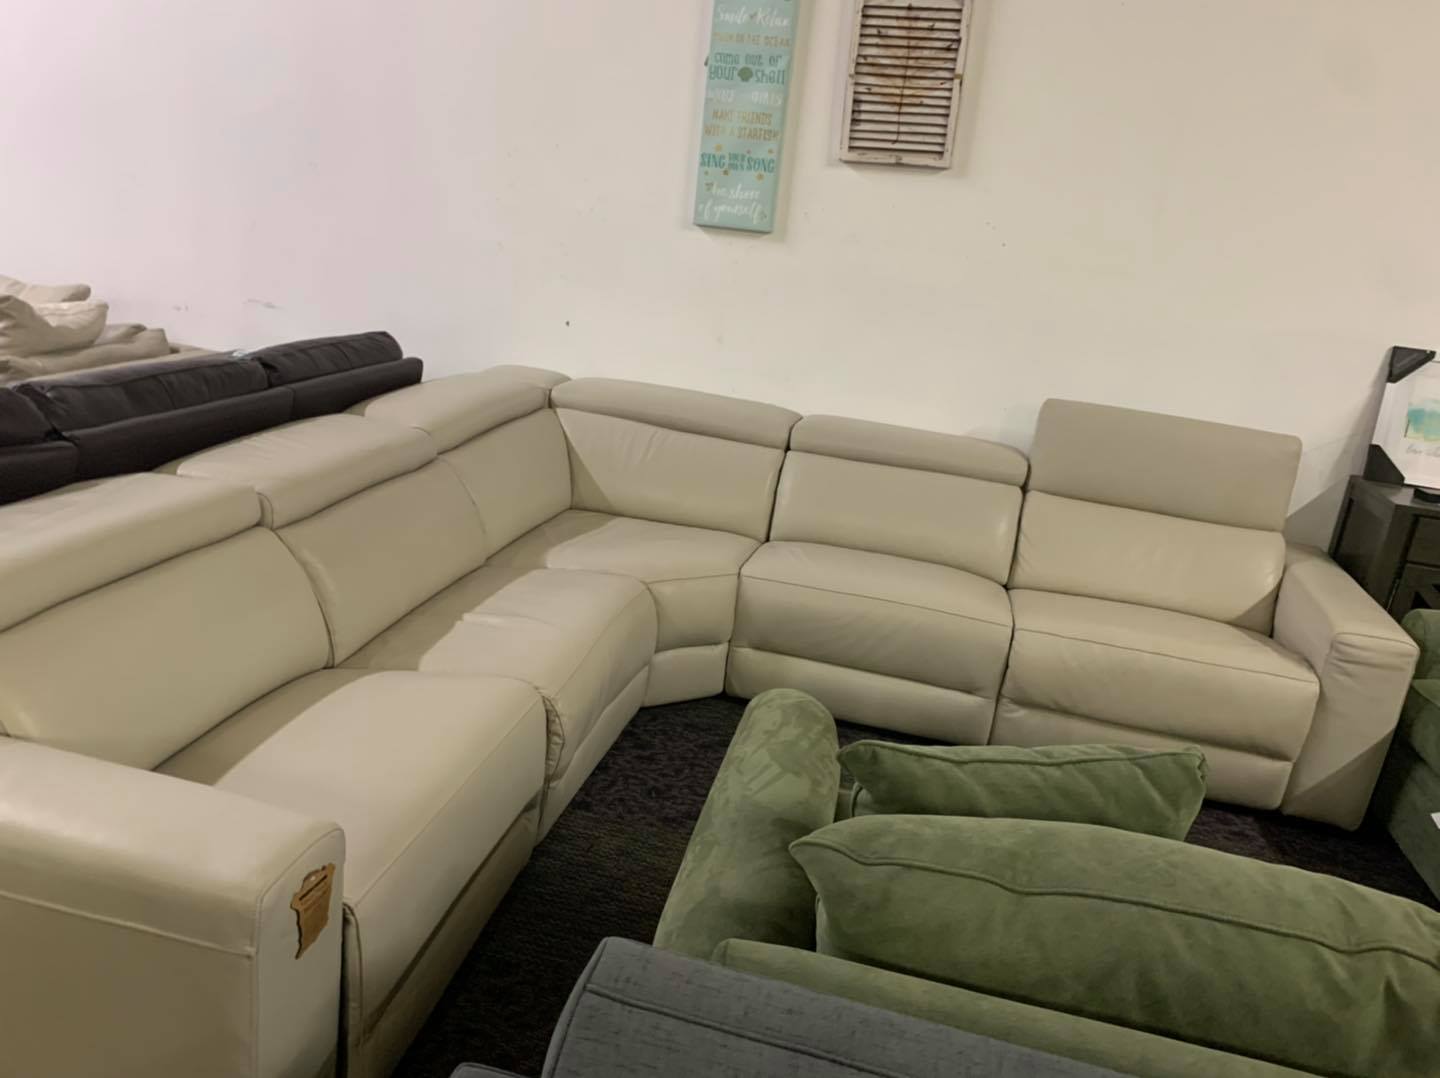 nevio 6-pc leather sectional sofa customer images